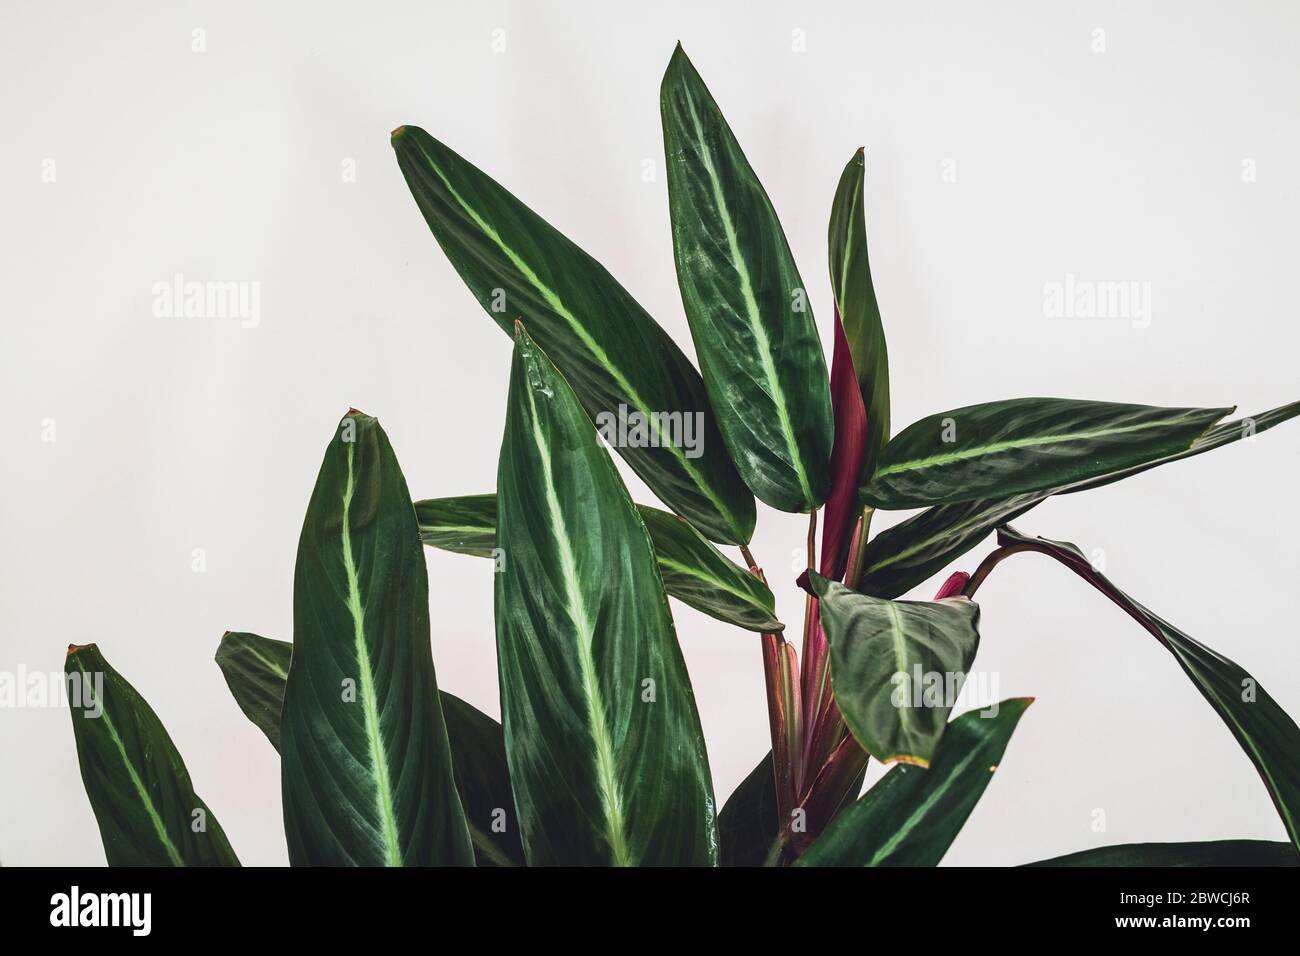 Prayer plant (stromanthe sanguinea) on a white background. Close-up on beautiful foliage of stromanthe sanguinea. Stock Photo